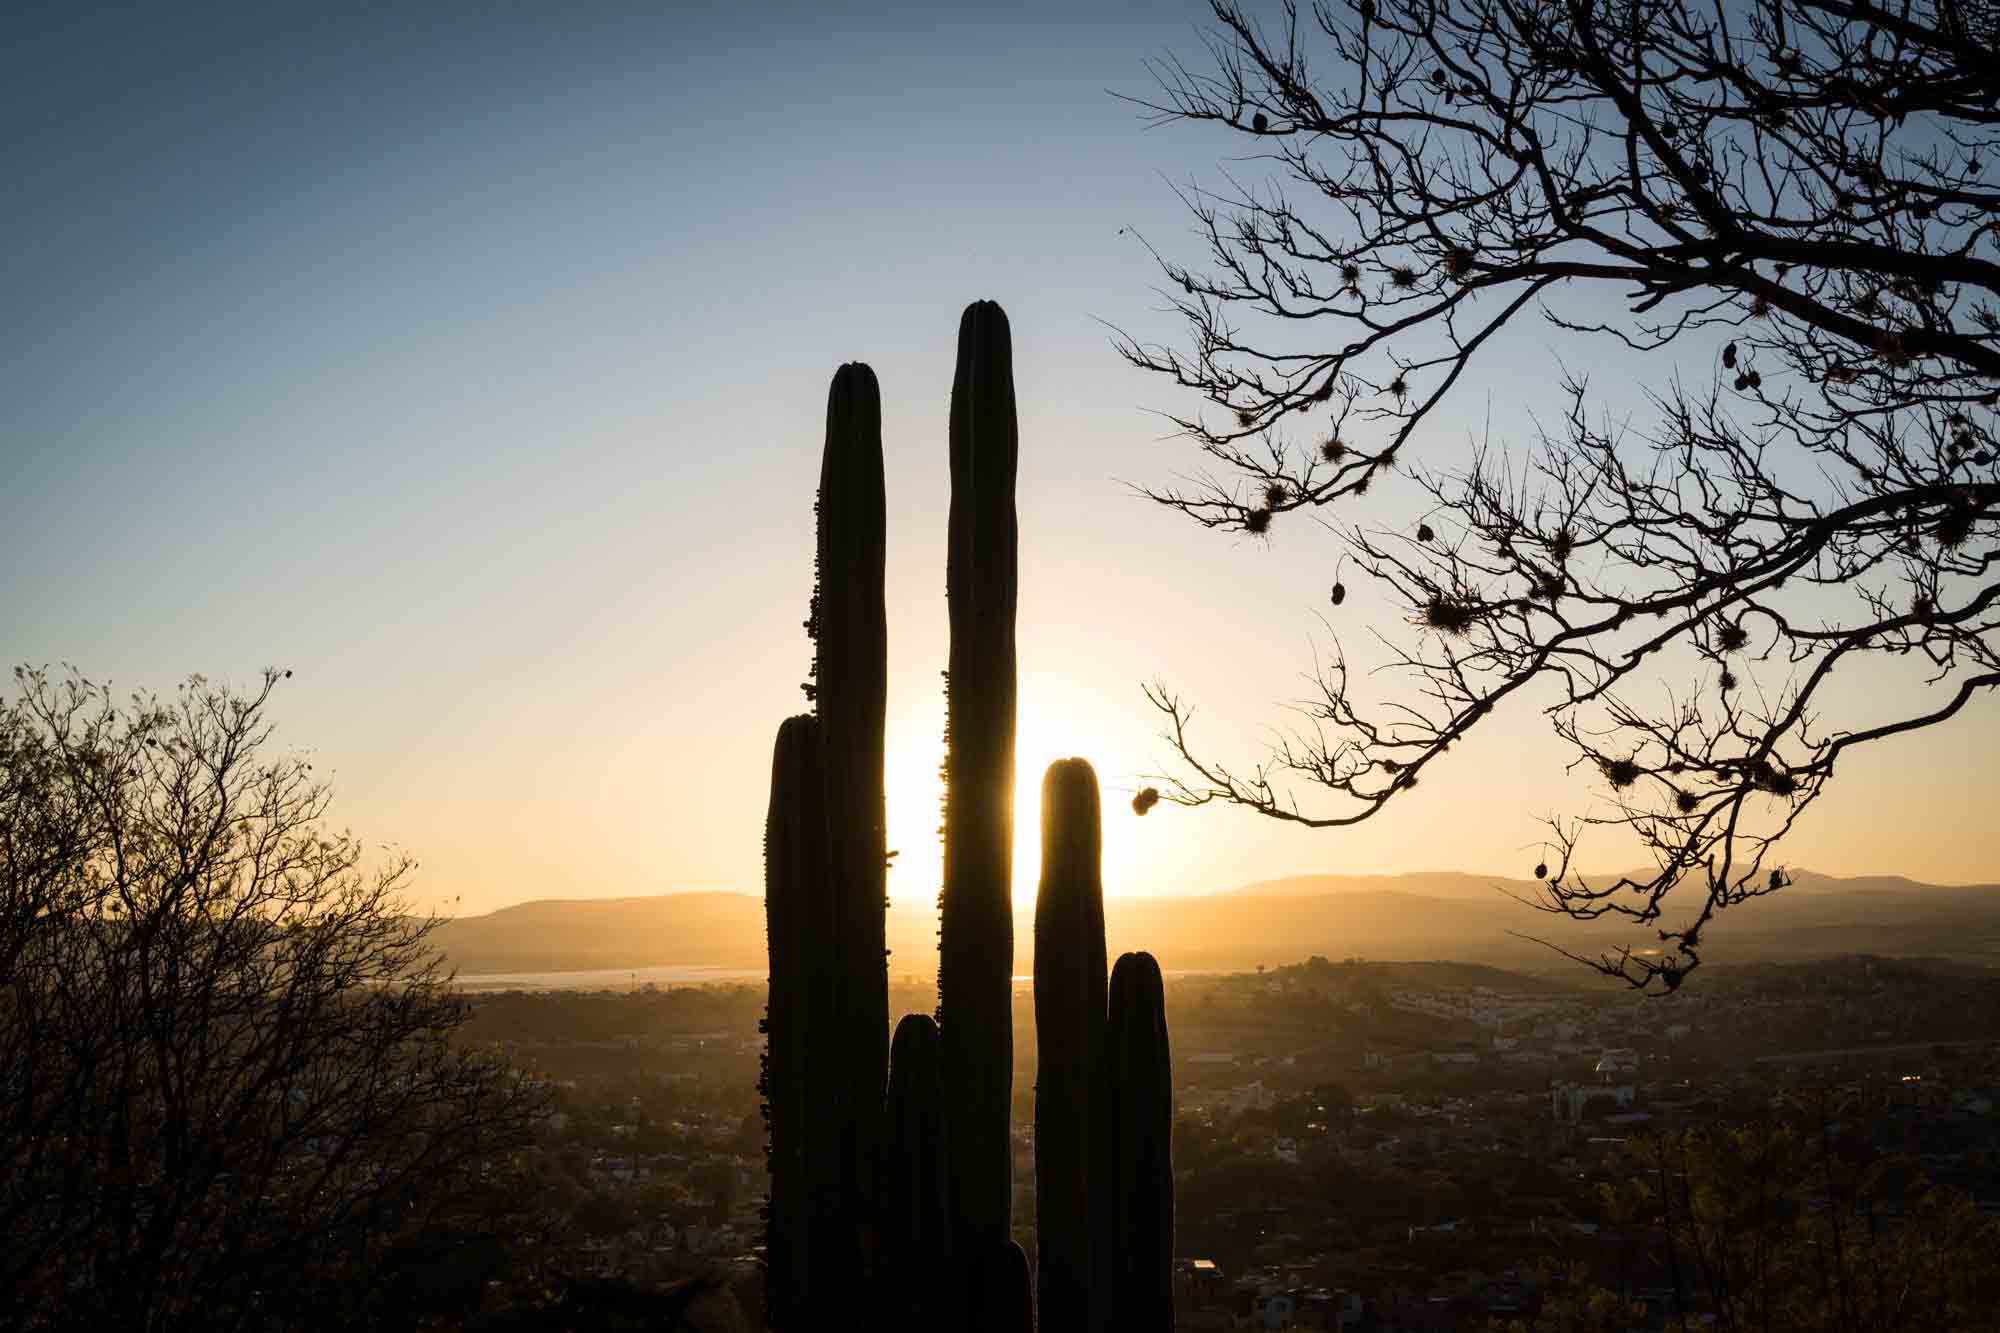 A cactus backlit against the city of San Miguel de Allende at sunset